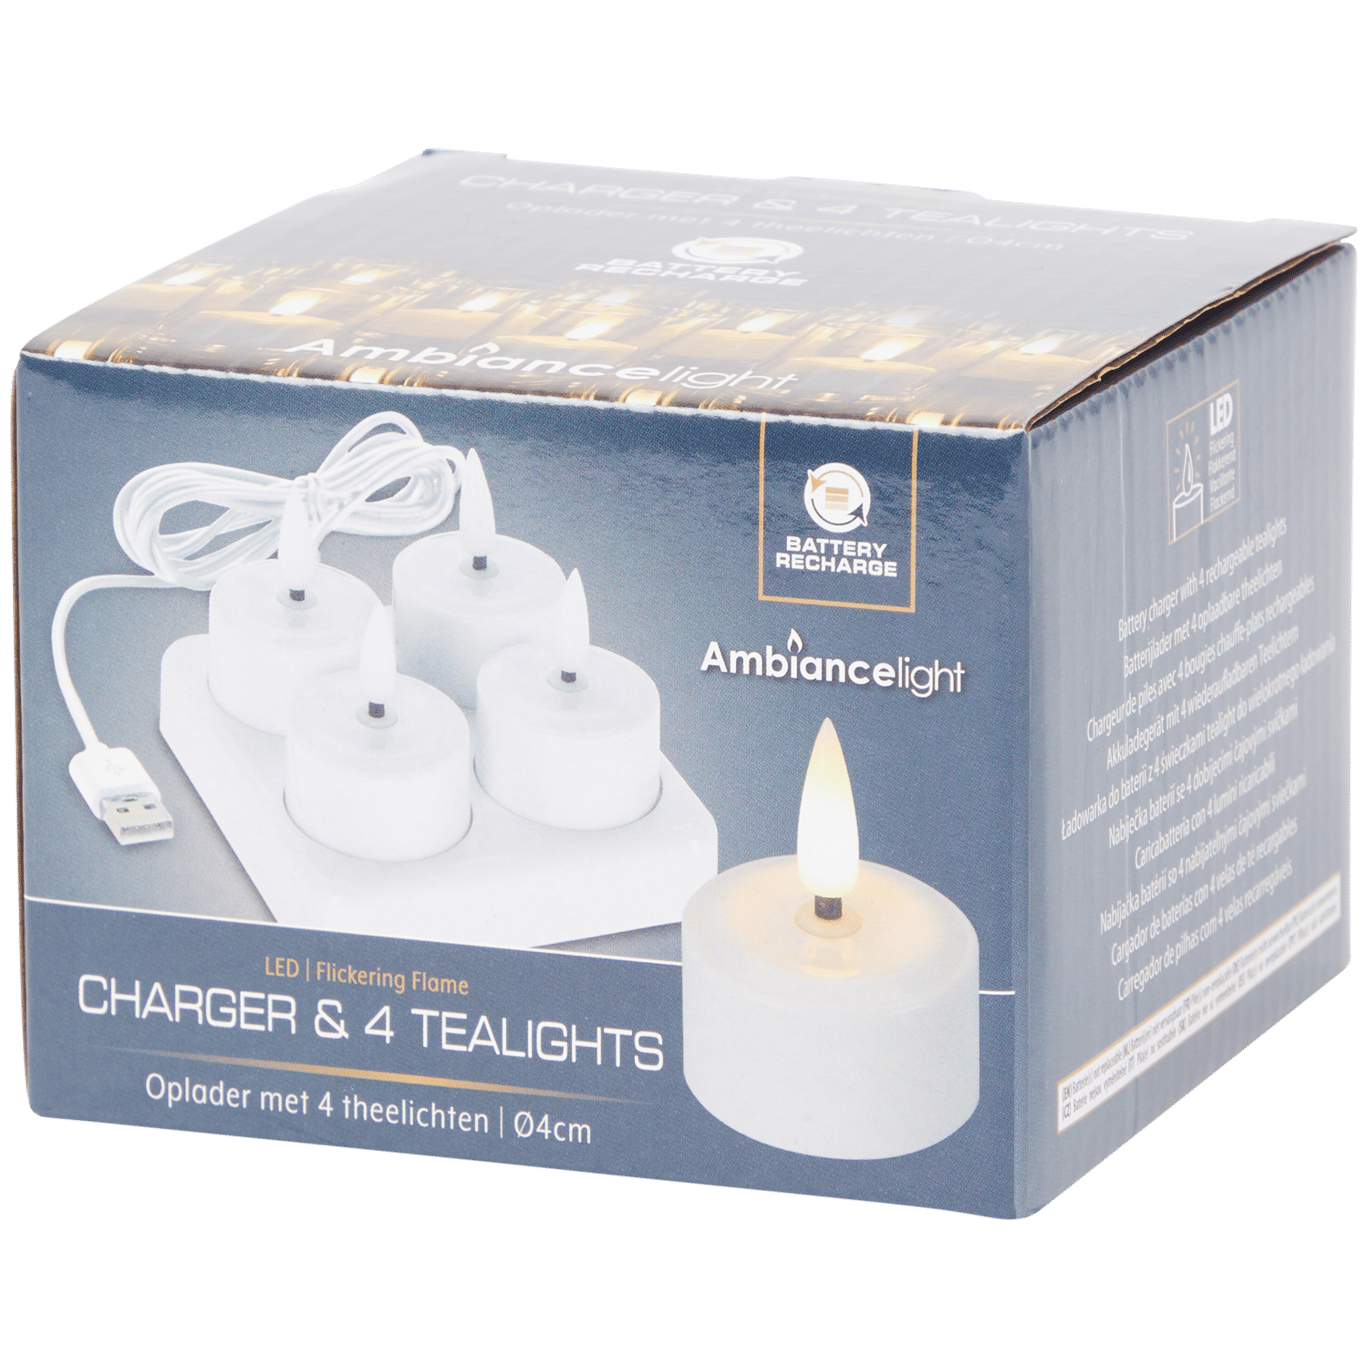 Bougies chauffe-plat - Boîte cadeau triangle de 6 paquets